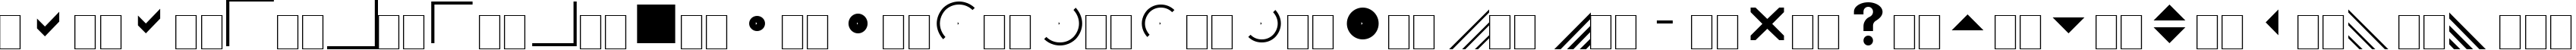 Пример написания английского алфавита шрифтом Marlett